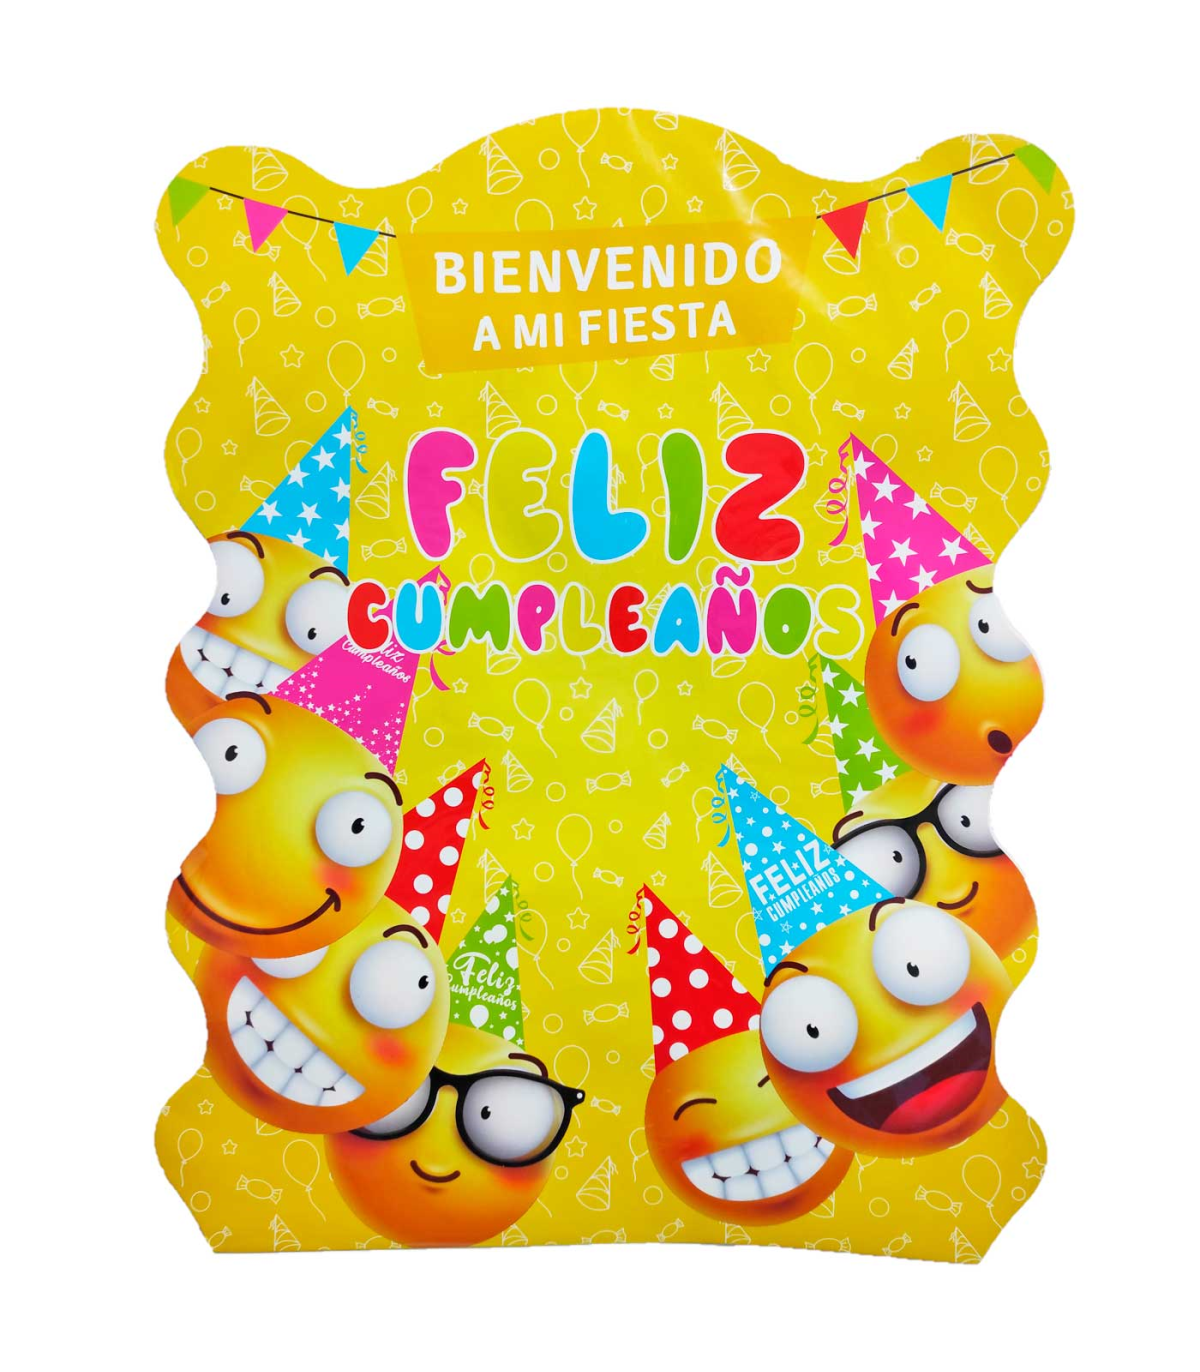 Tradineur - Piñata redonda de feliz cumpleaños con animales, cartón,  rellenar con golosinas, chuches, decoración infantil para f